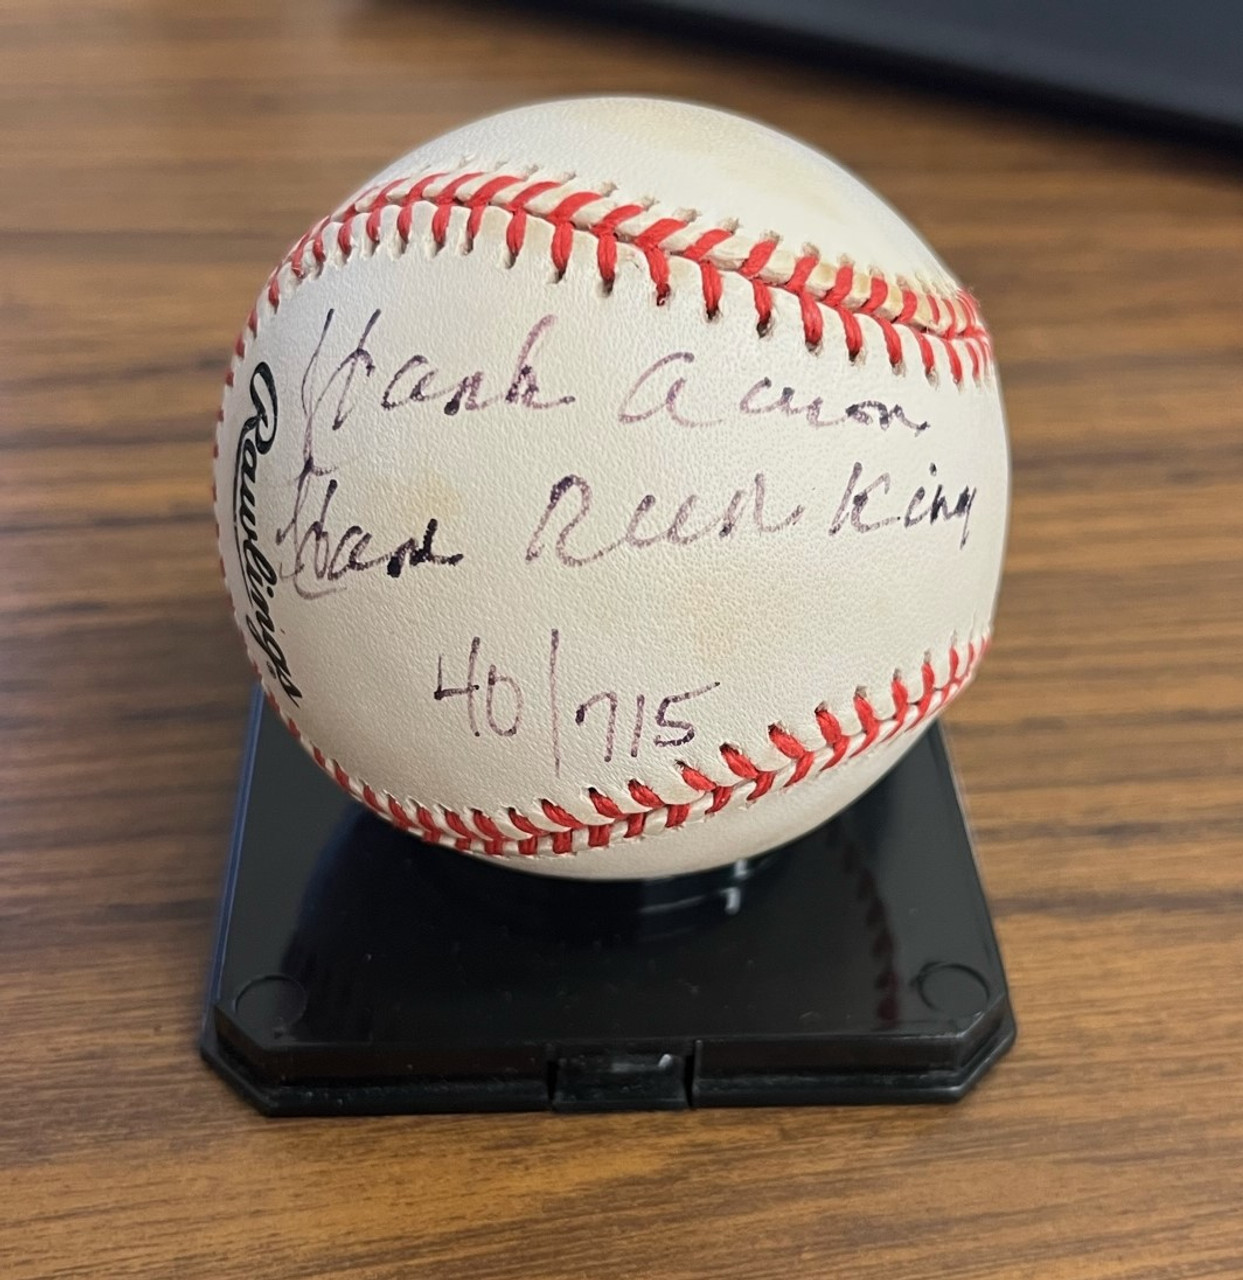 Hank Aaron, Autographed (JSA Full Letter) Official Baseball